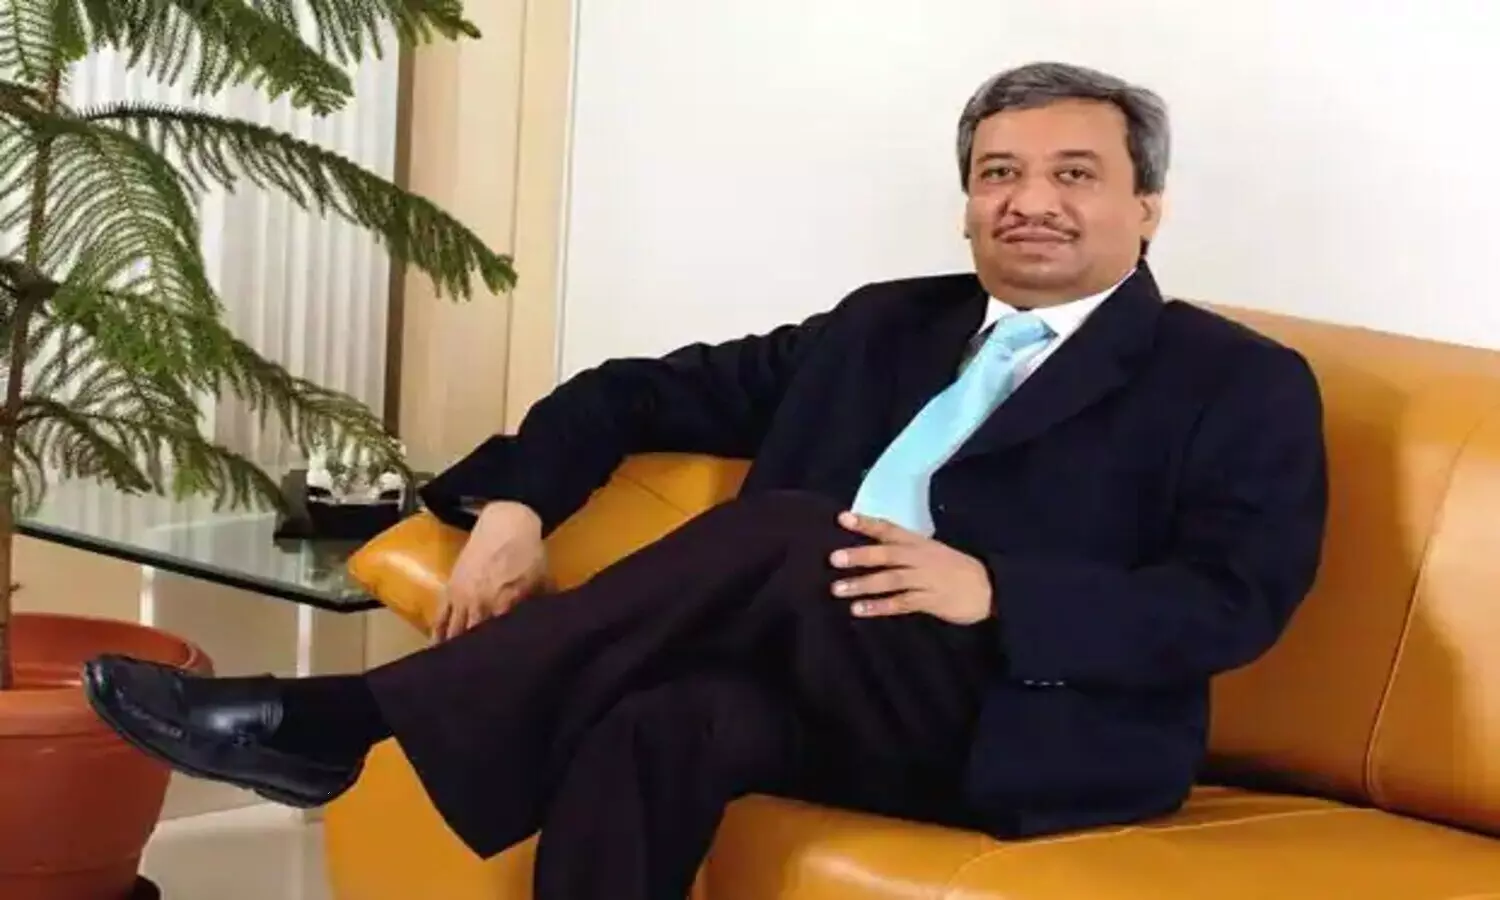 Gujarat Medicine businessman Pankaj Patel